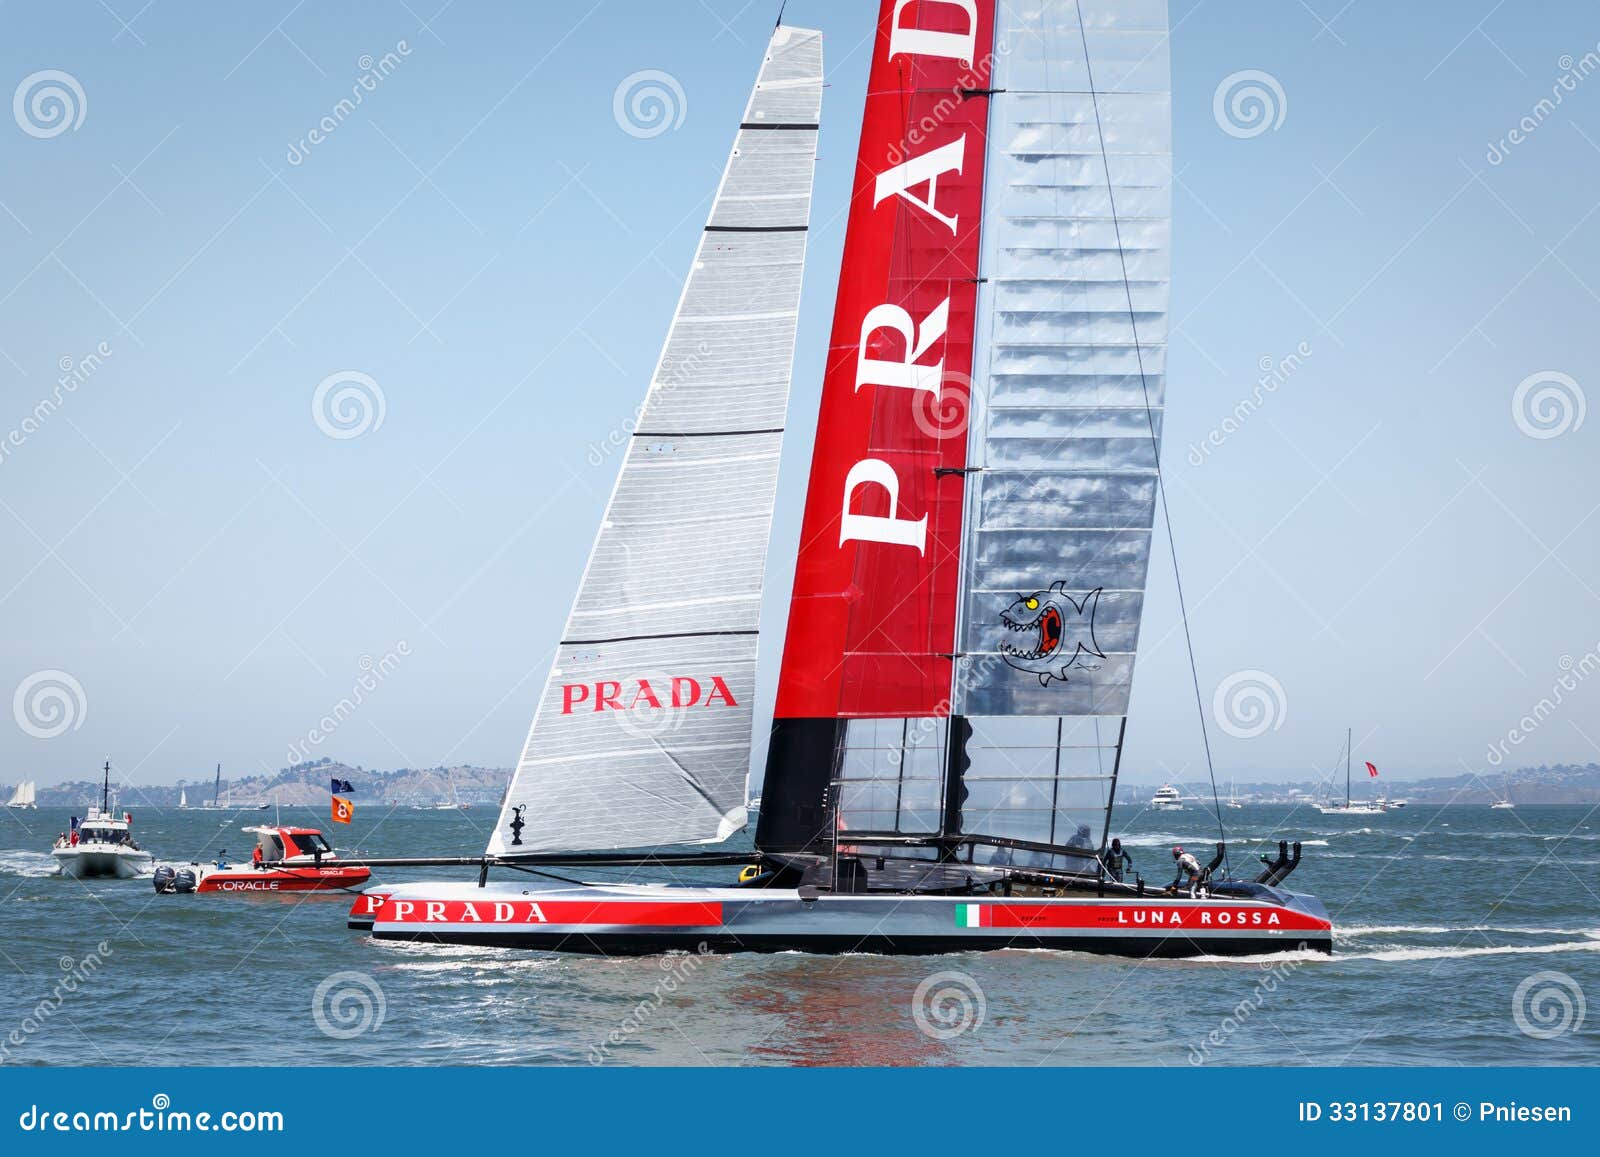 Louis Vuitton Cup Race Team Luna Rossa AC 72 Catamaran Sailboat Editorial Photo - Image: 33137801